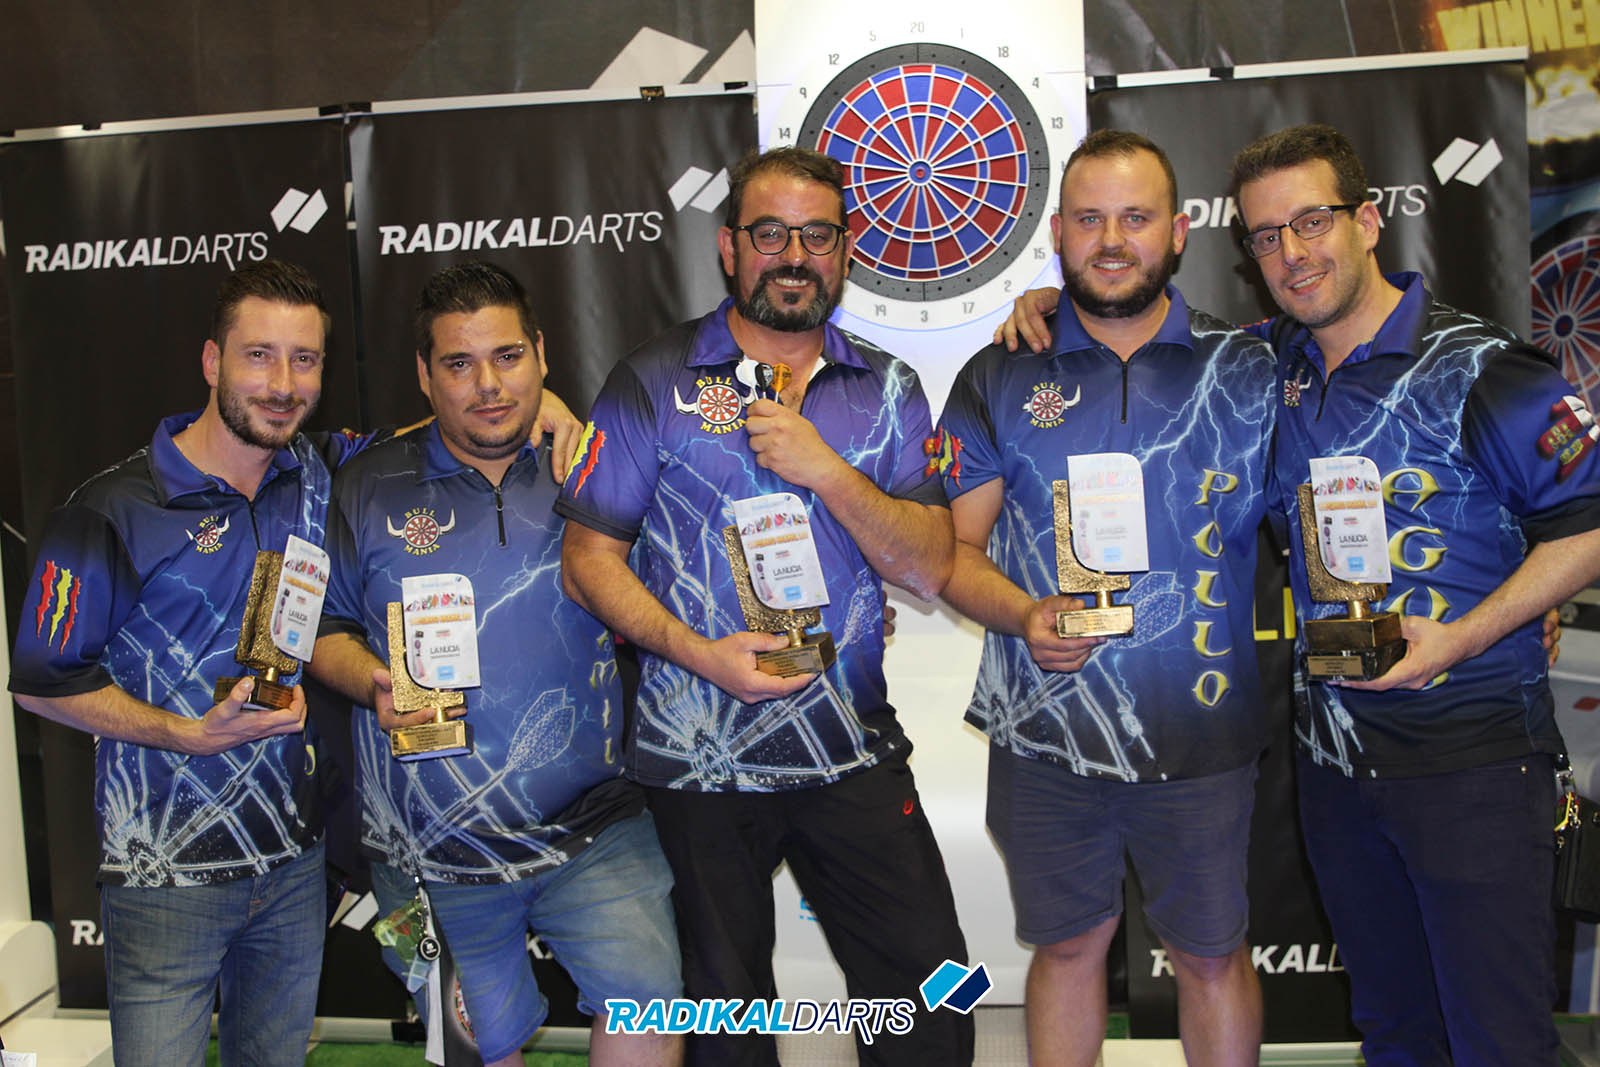 Campeonato Nacional RadikalDarts Gorditos Kings Subcampeón Equipos Nivel 2. Nacional RadikalDarts 2018